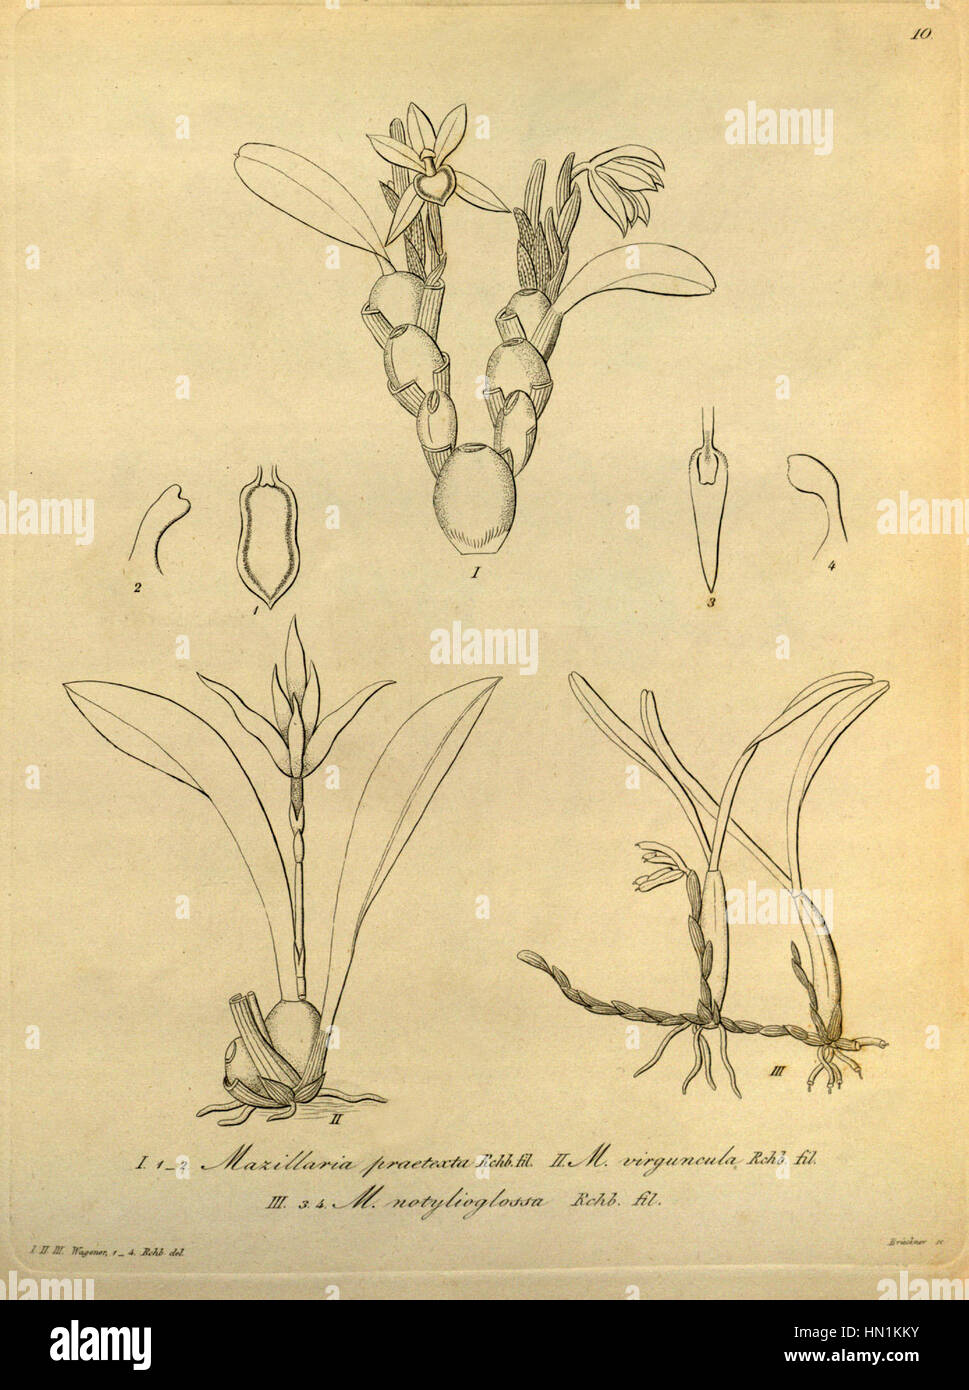 Maxillaria praetexta - Maxillaria virguncula - Maxillaria notylioglossa - Xenia 1 pl. 10 (1858) Stock Photo